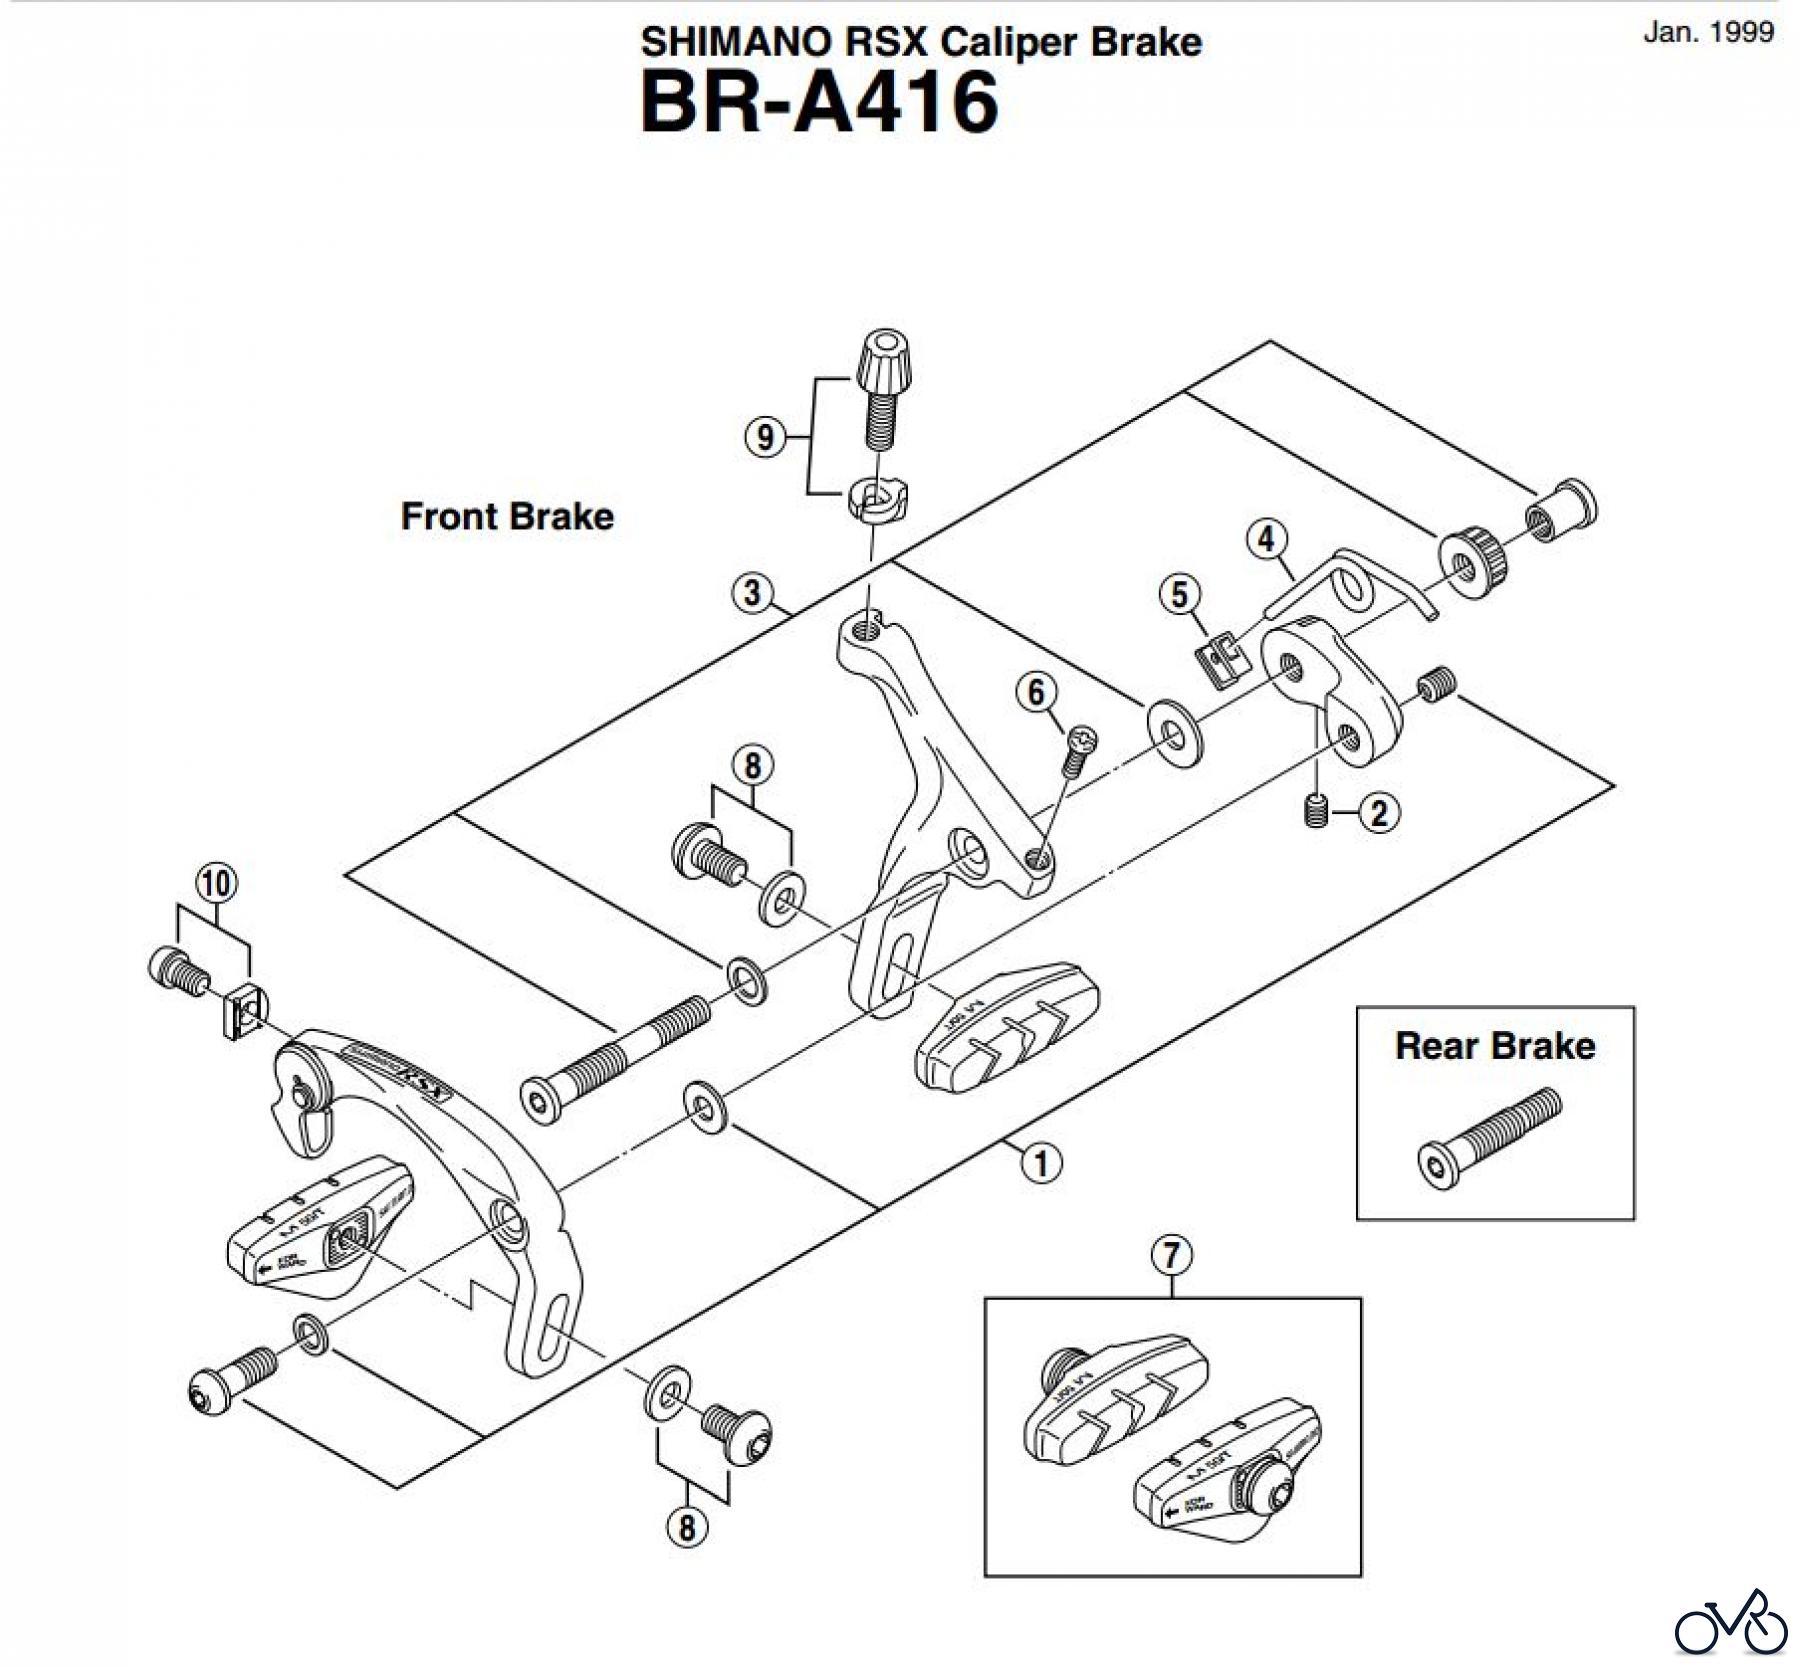  Shimano BR Brake - Bremse BR-A416 SHIMANO RSX Caliper Brake